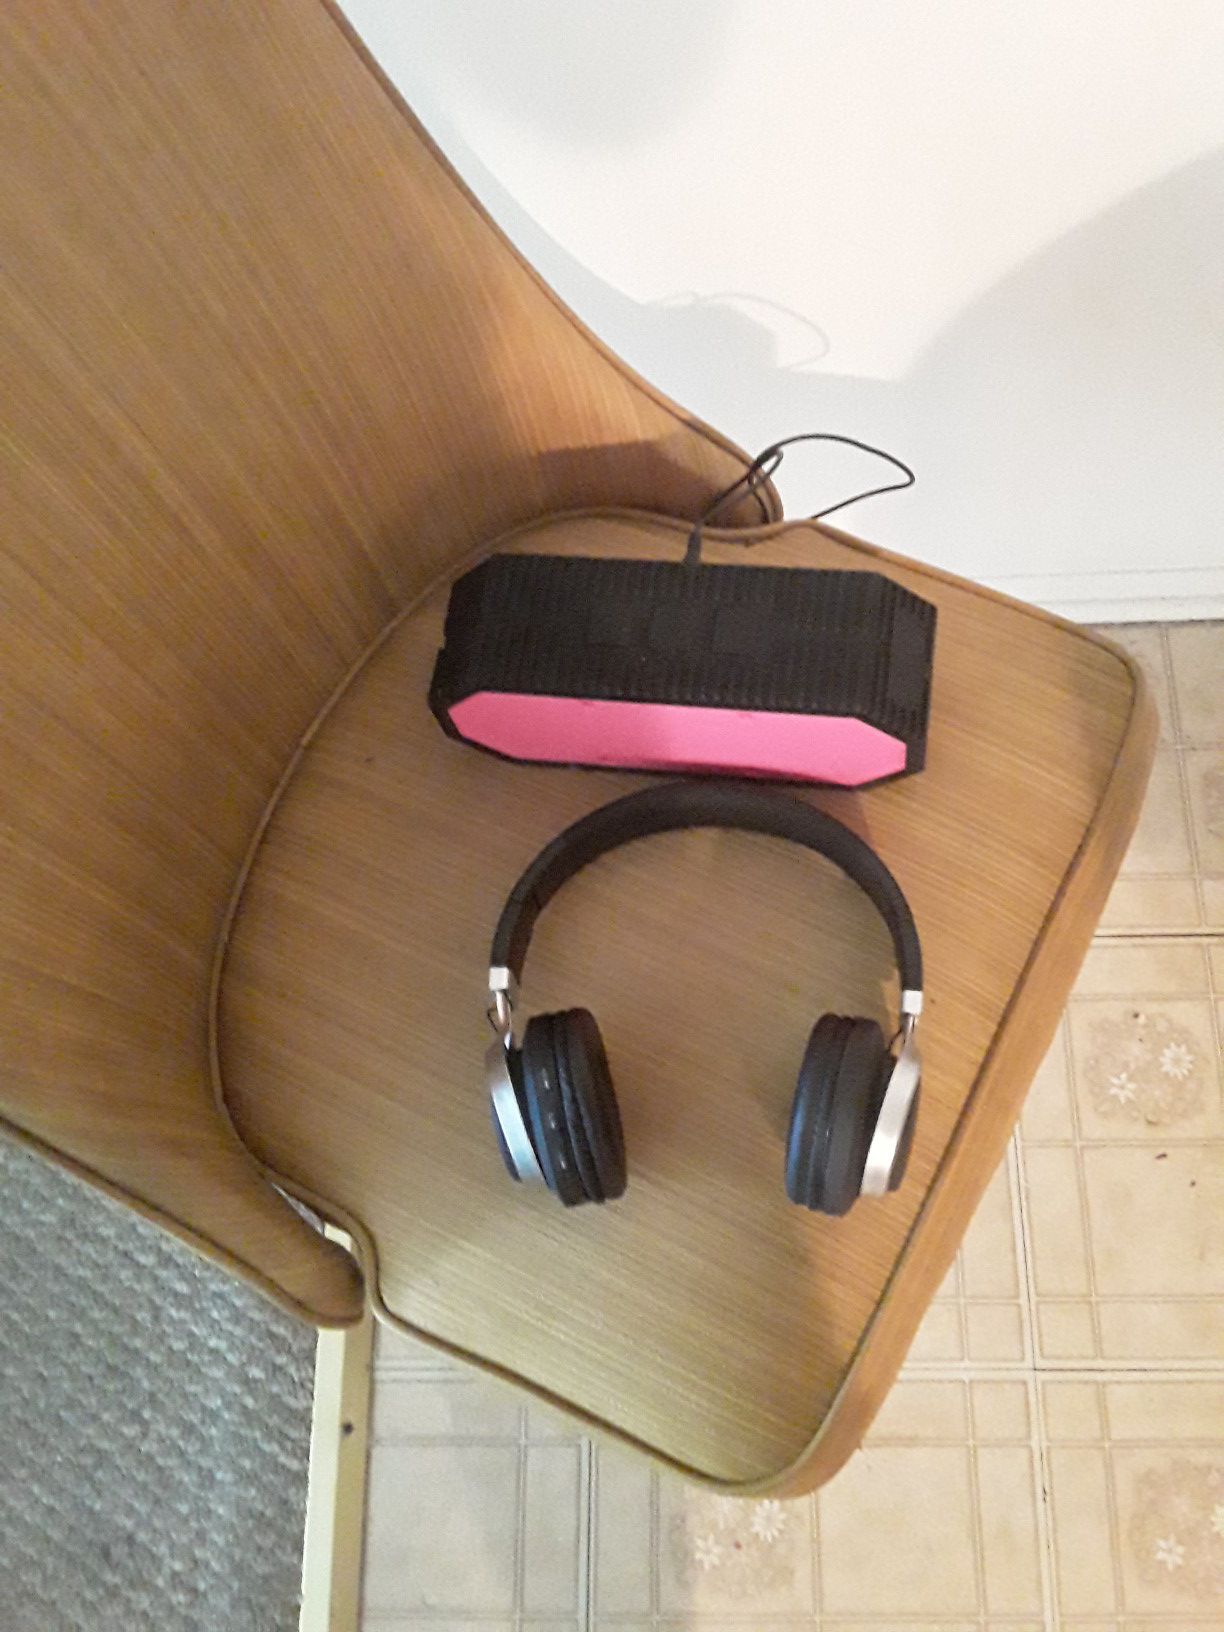 Bluetooth speaker waterproof with matching headphones